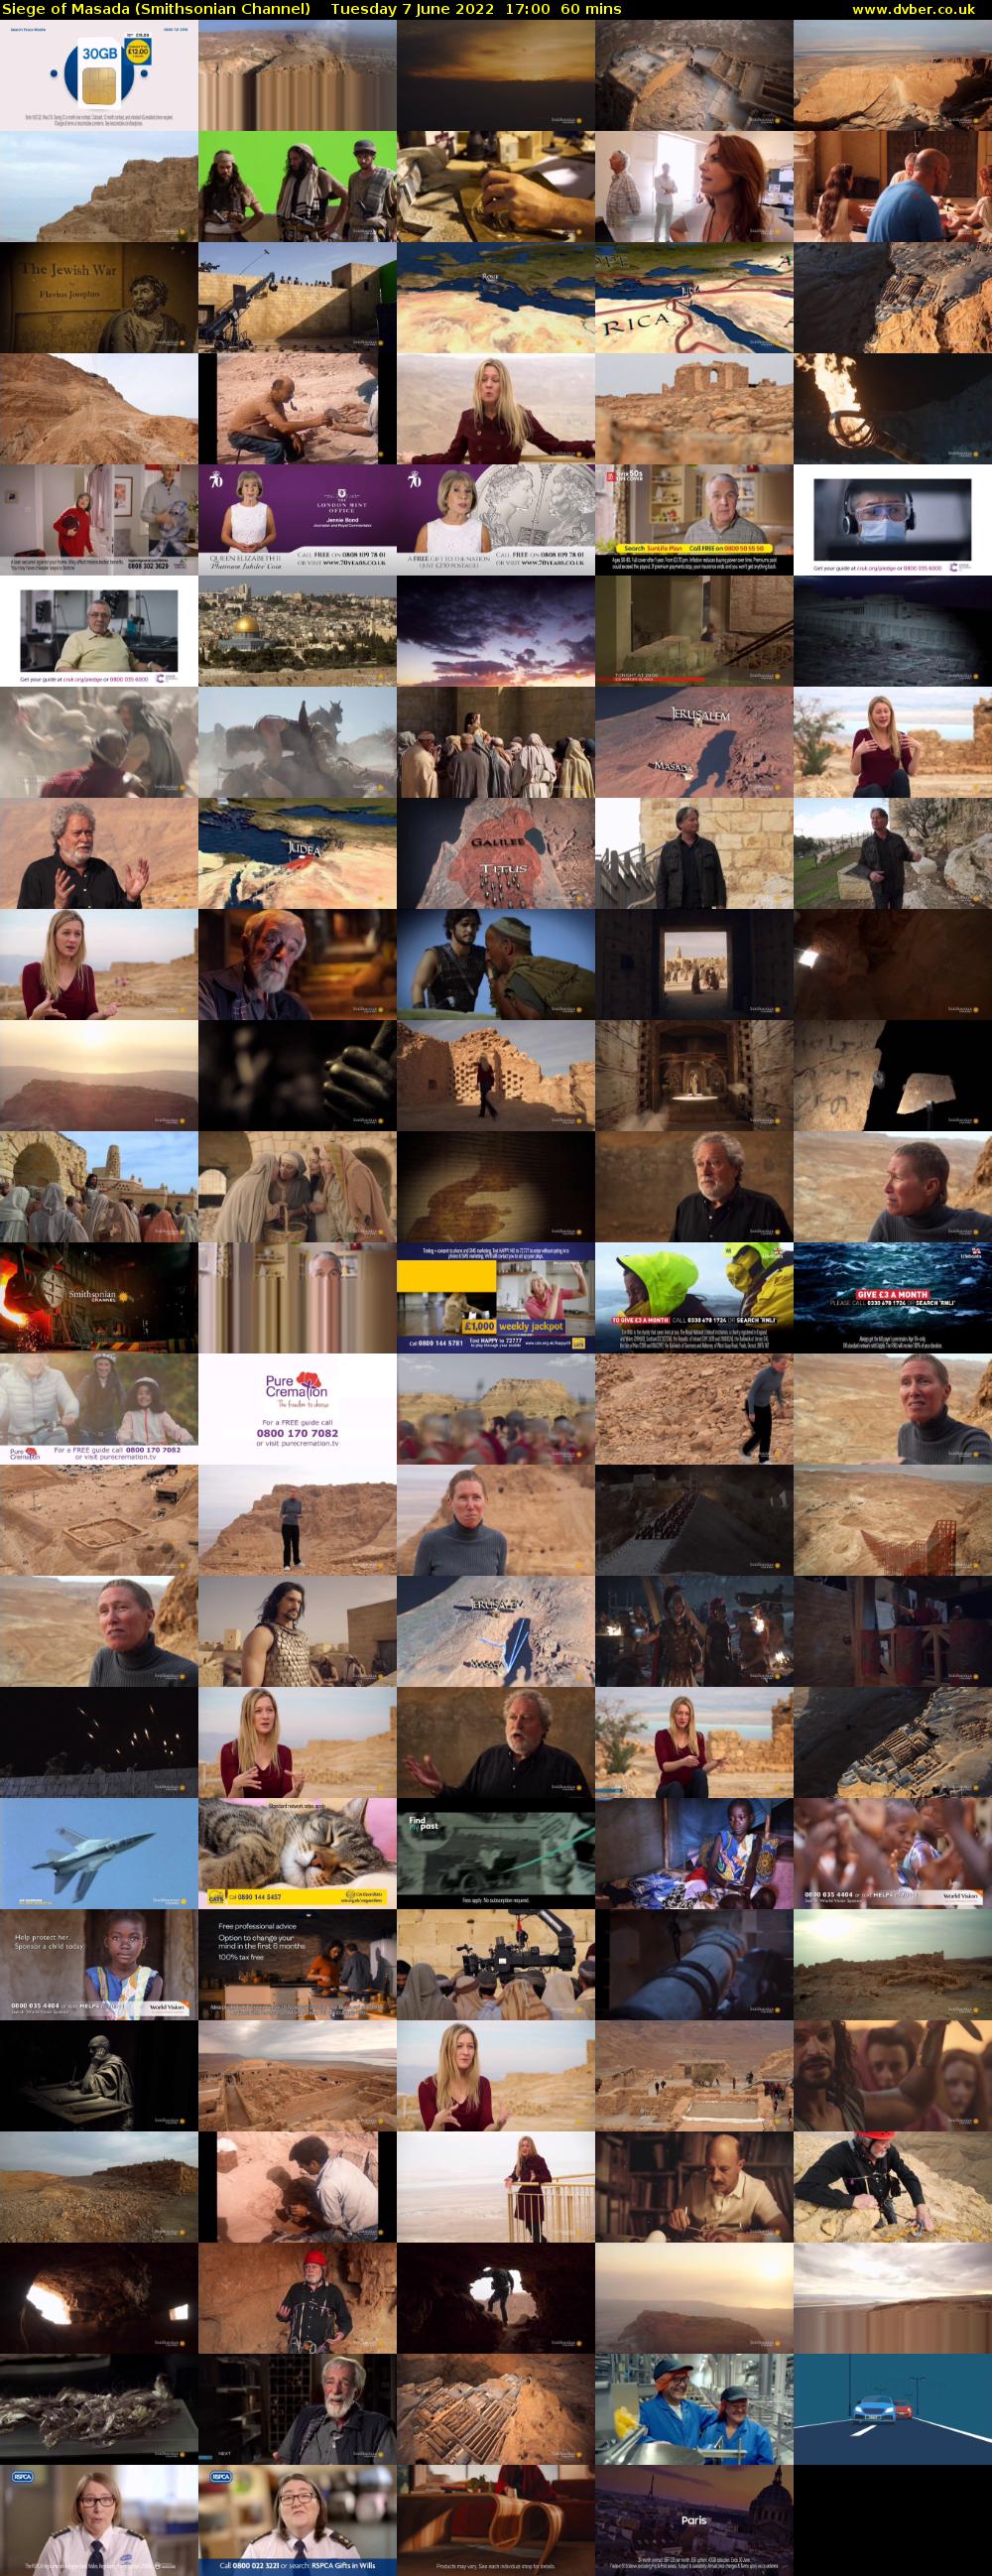 Siege of Masada (Smithsonian Channel) Tuesday 7 June 2022 17:00 - 18:00